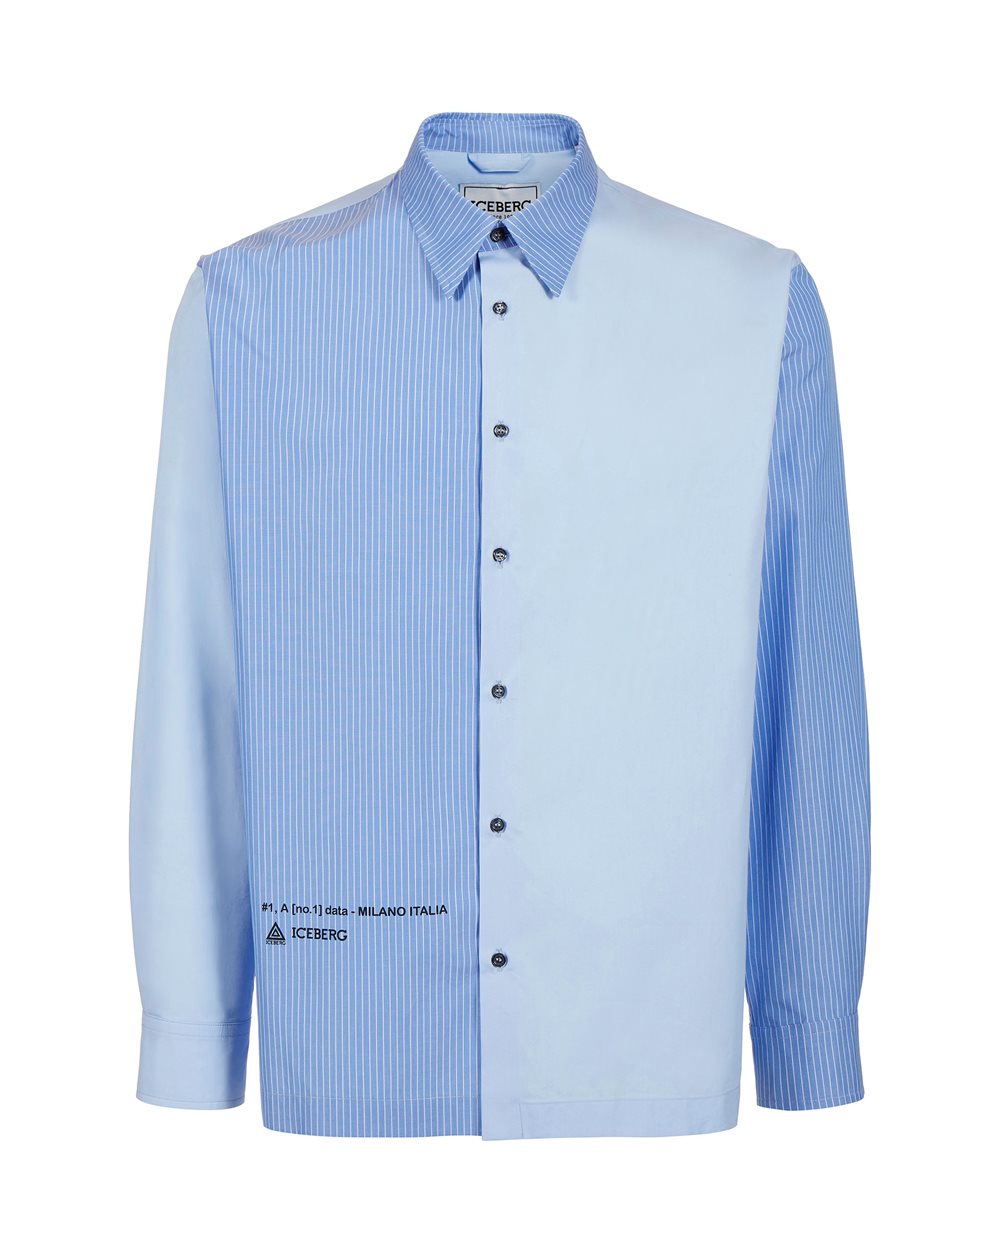 Light blue shirt with logo - shirts | Iceberg - Official Website